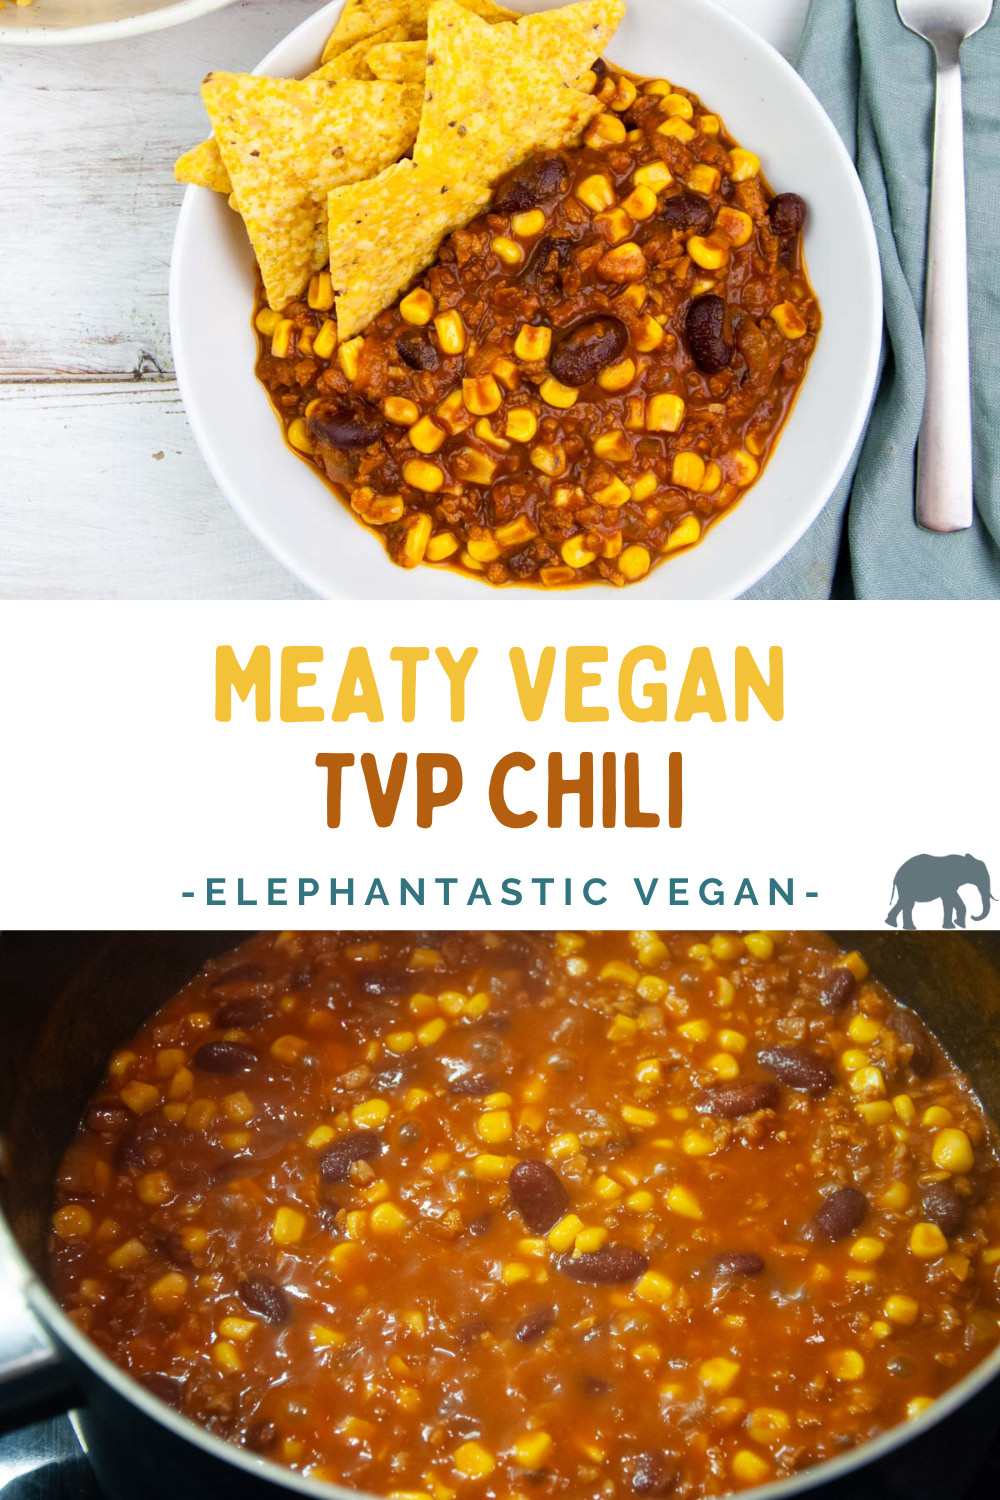 Meaty Vegan TVP Chili